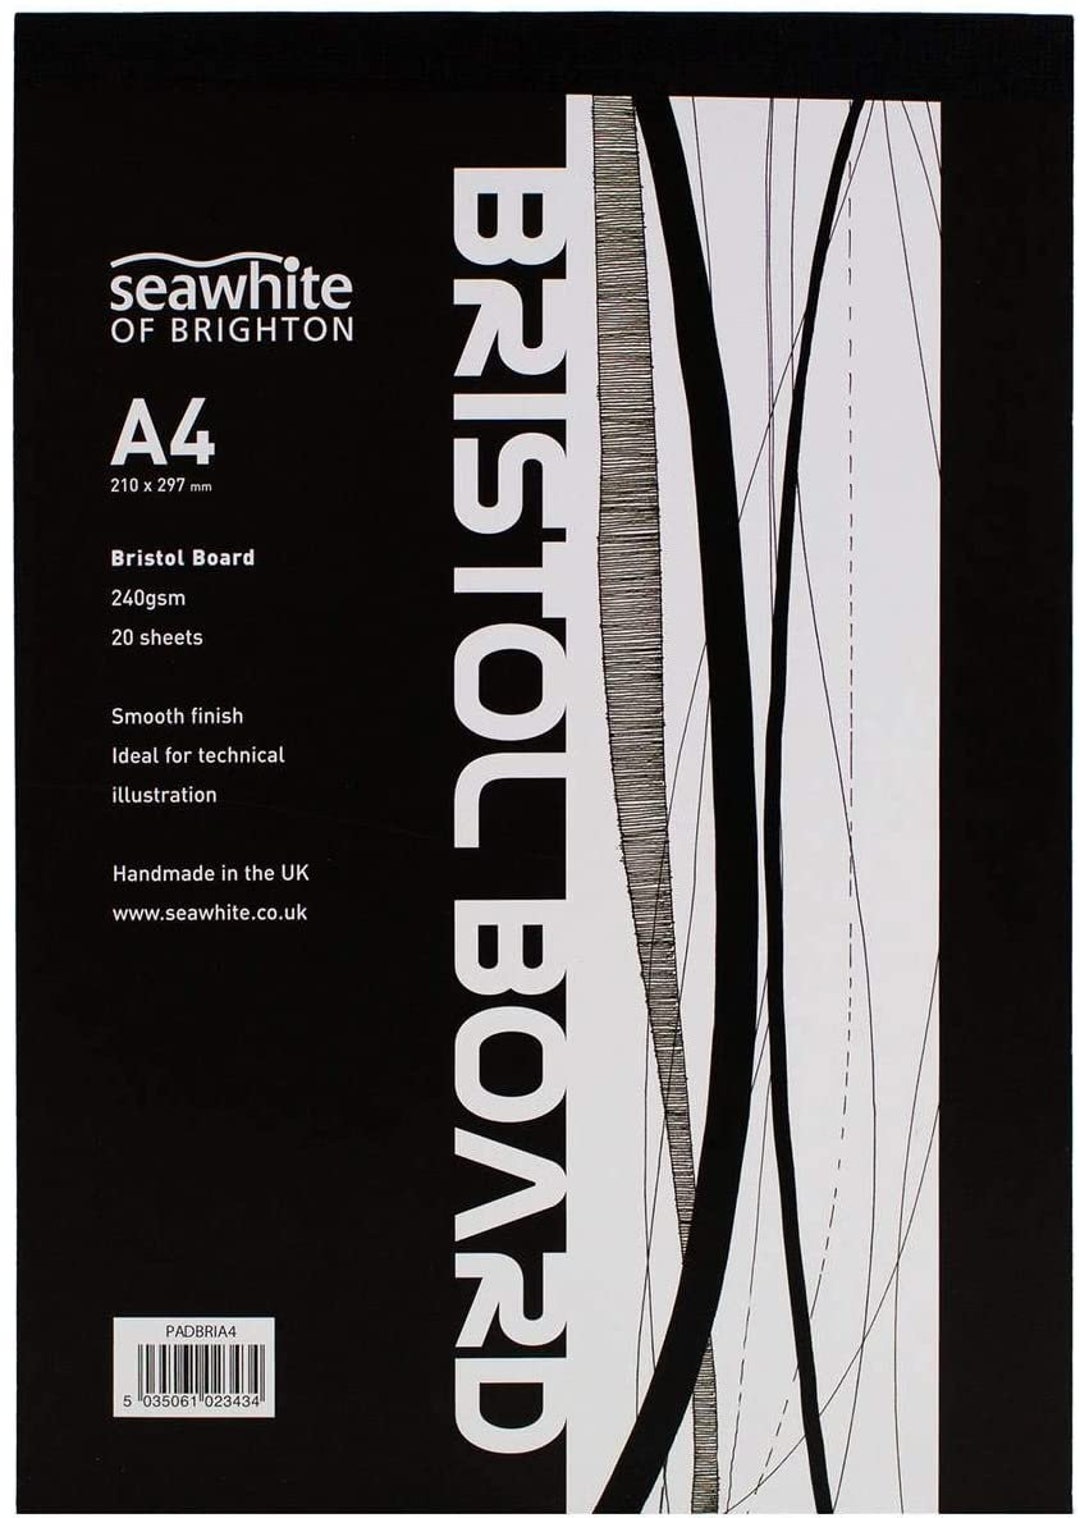  Pad Sleeve A4 Bristol Paper : Arts, Crafts & Sewing